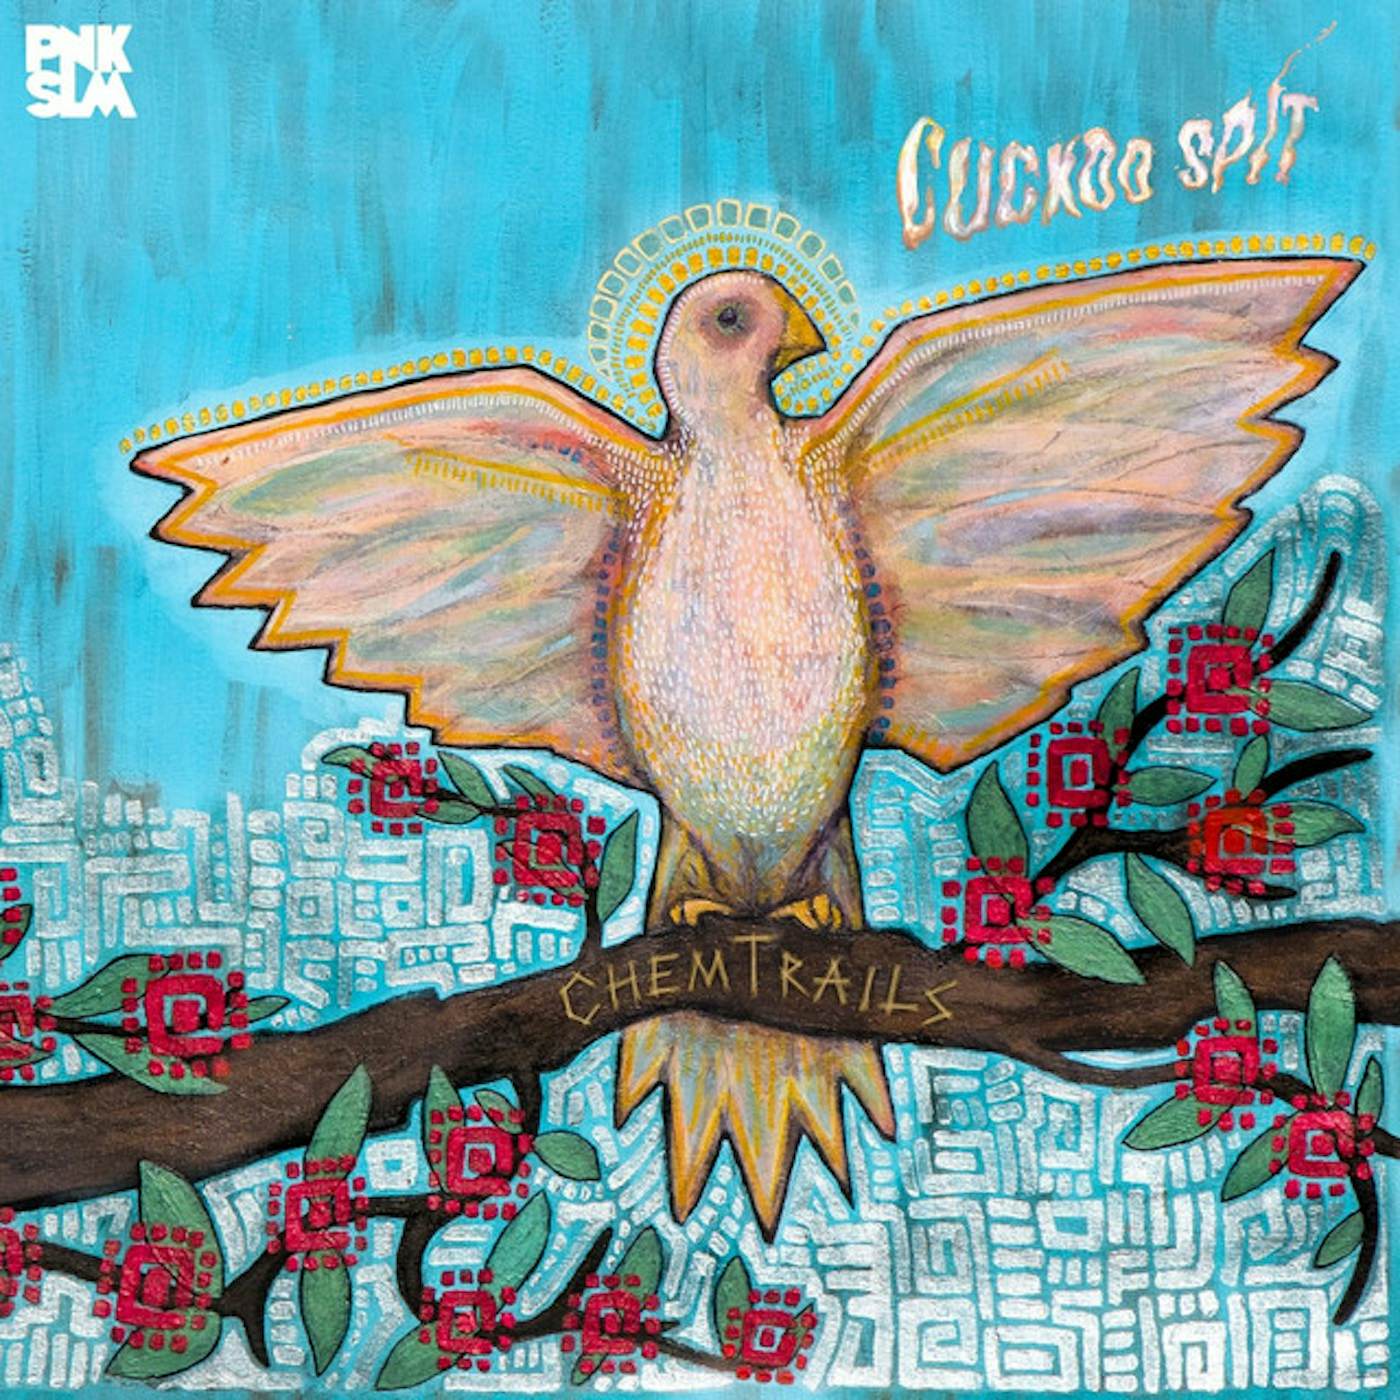 Chemtrails Cuckoo Spit Vinyl Record